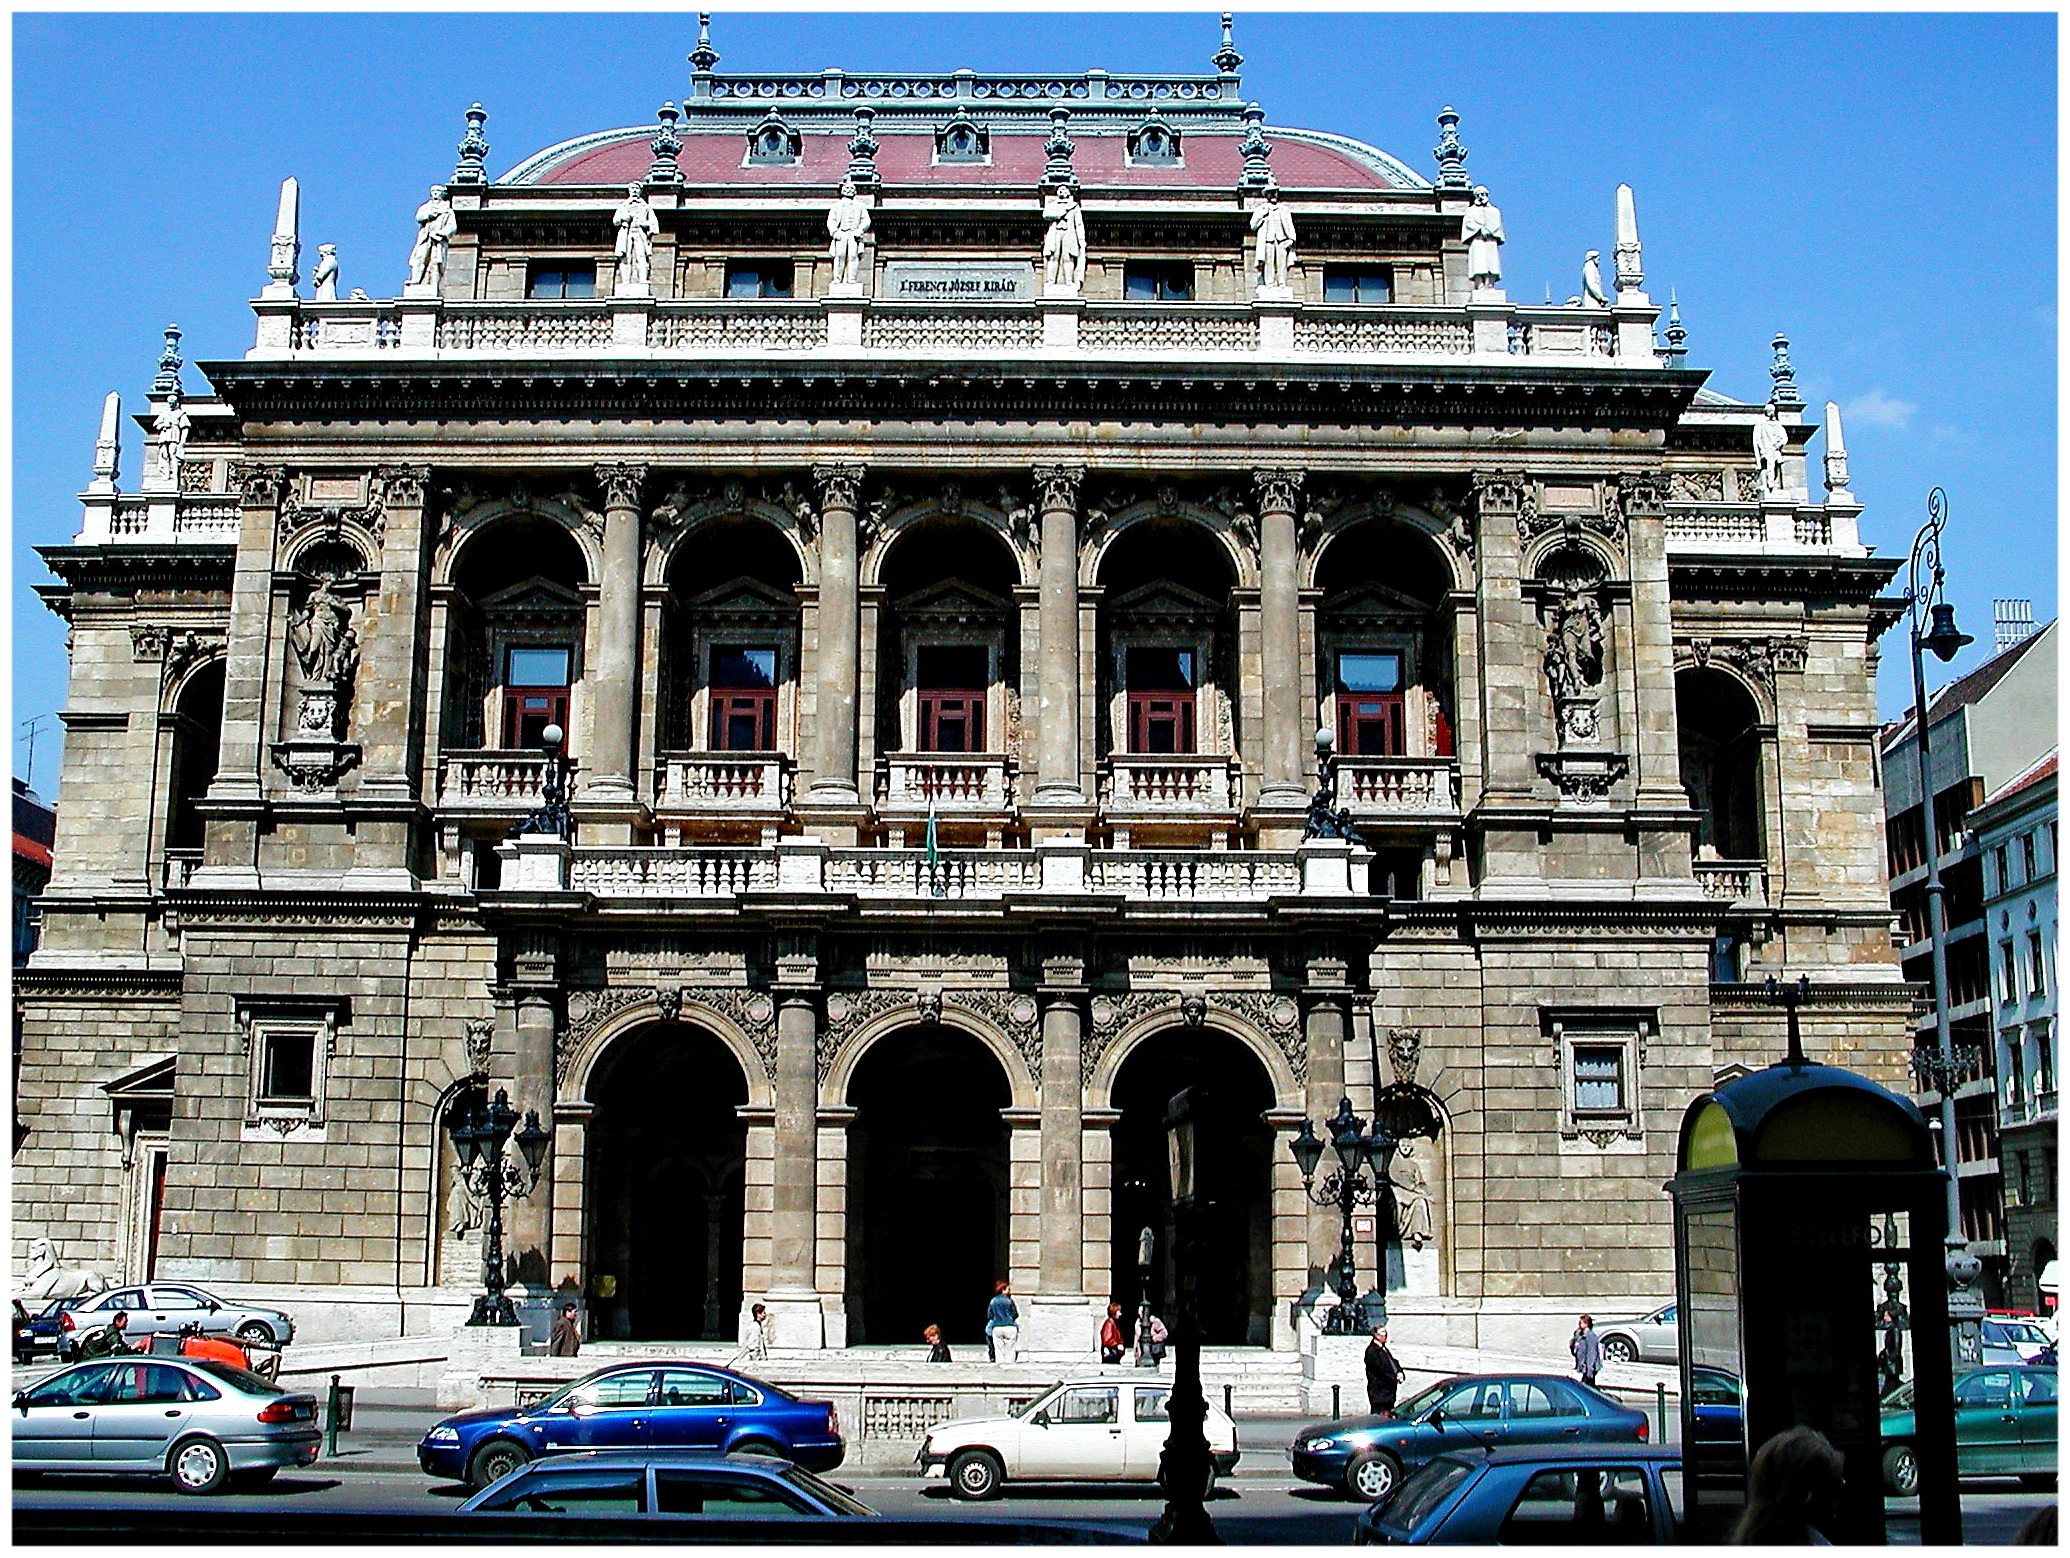 Budapest Opera